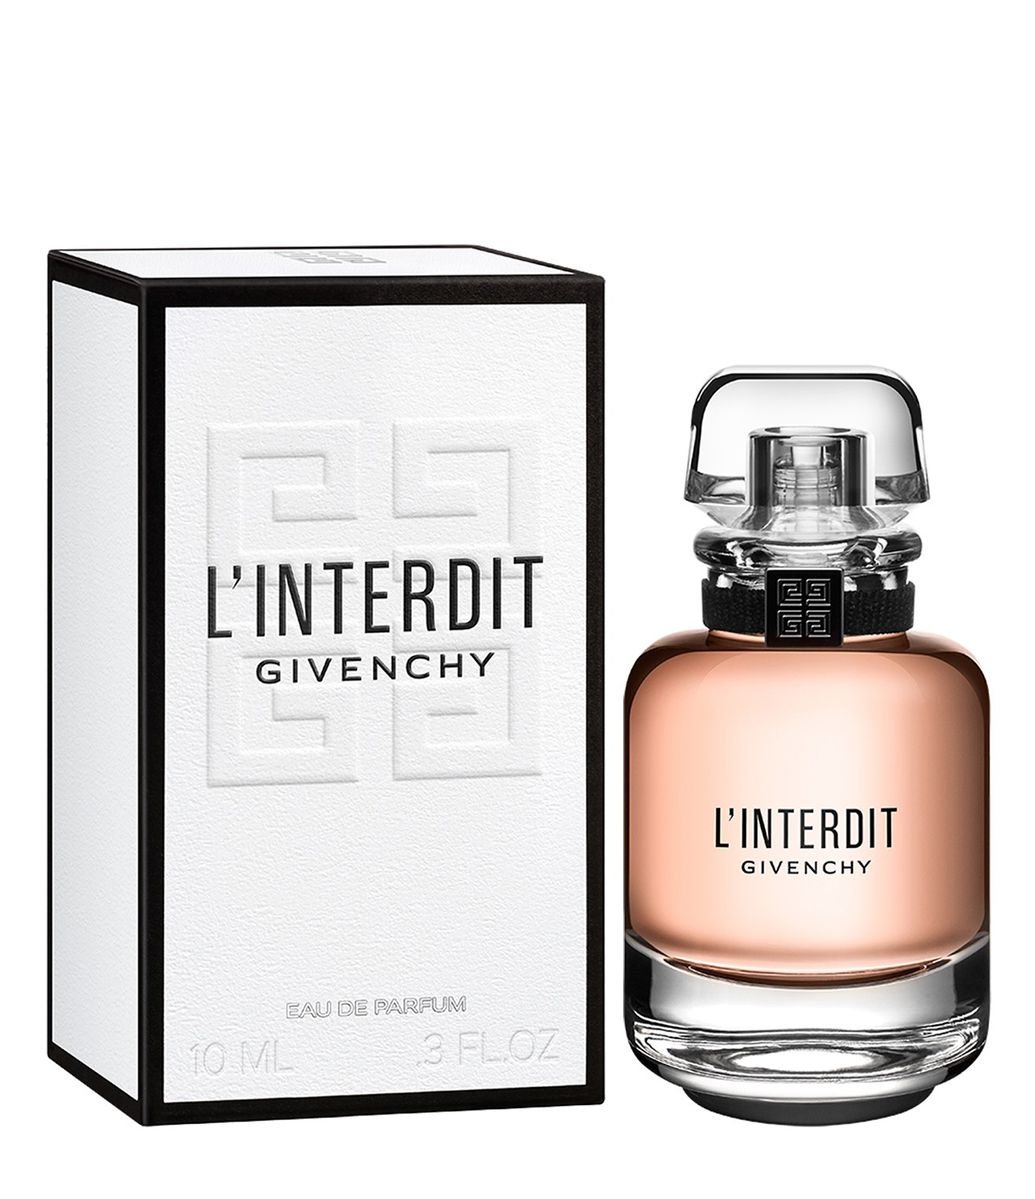 Perfume Givenchy L'Interdit Feminino Eau de Parfum 35ml